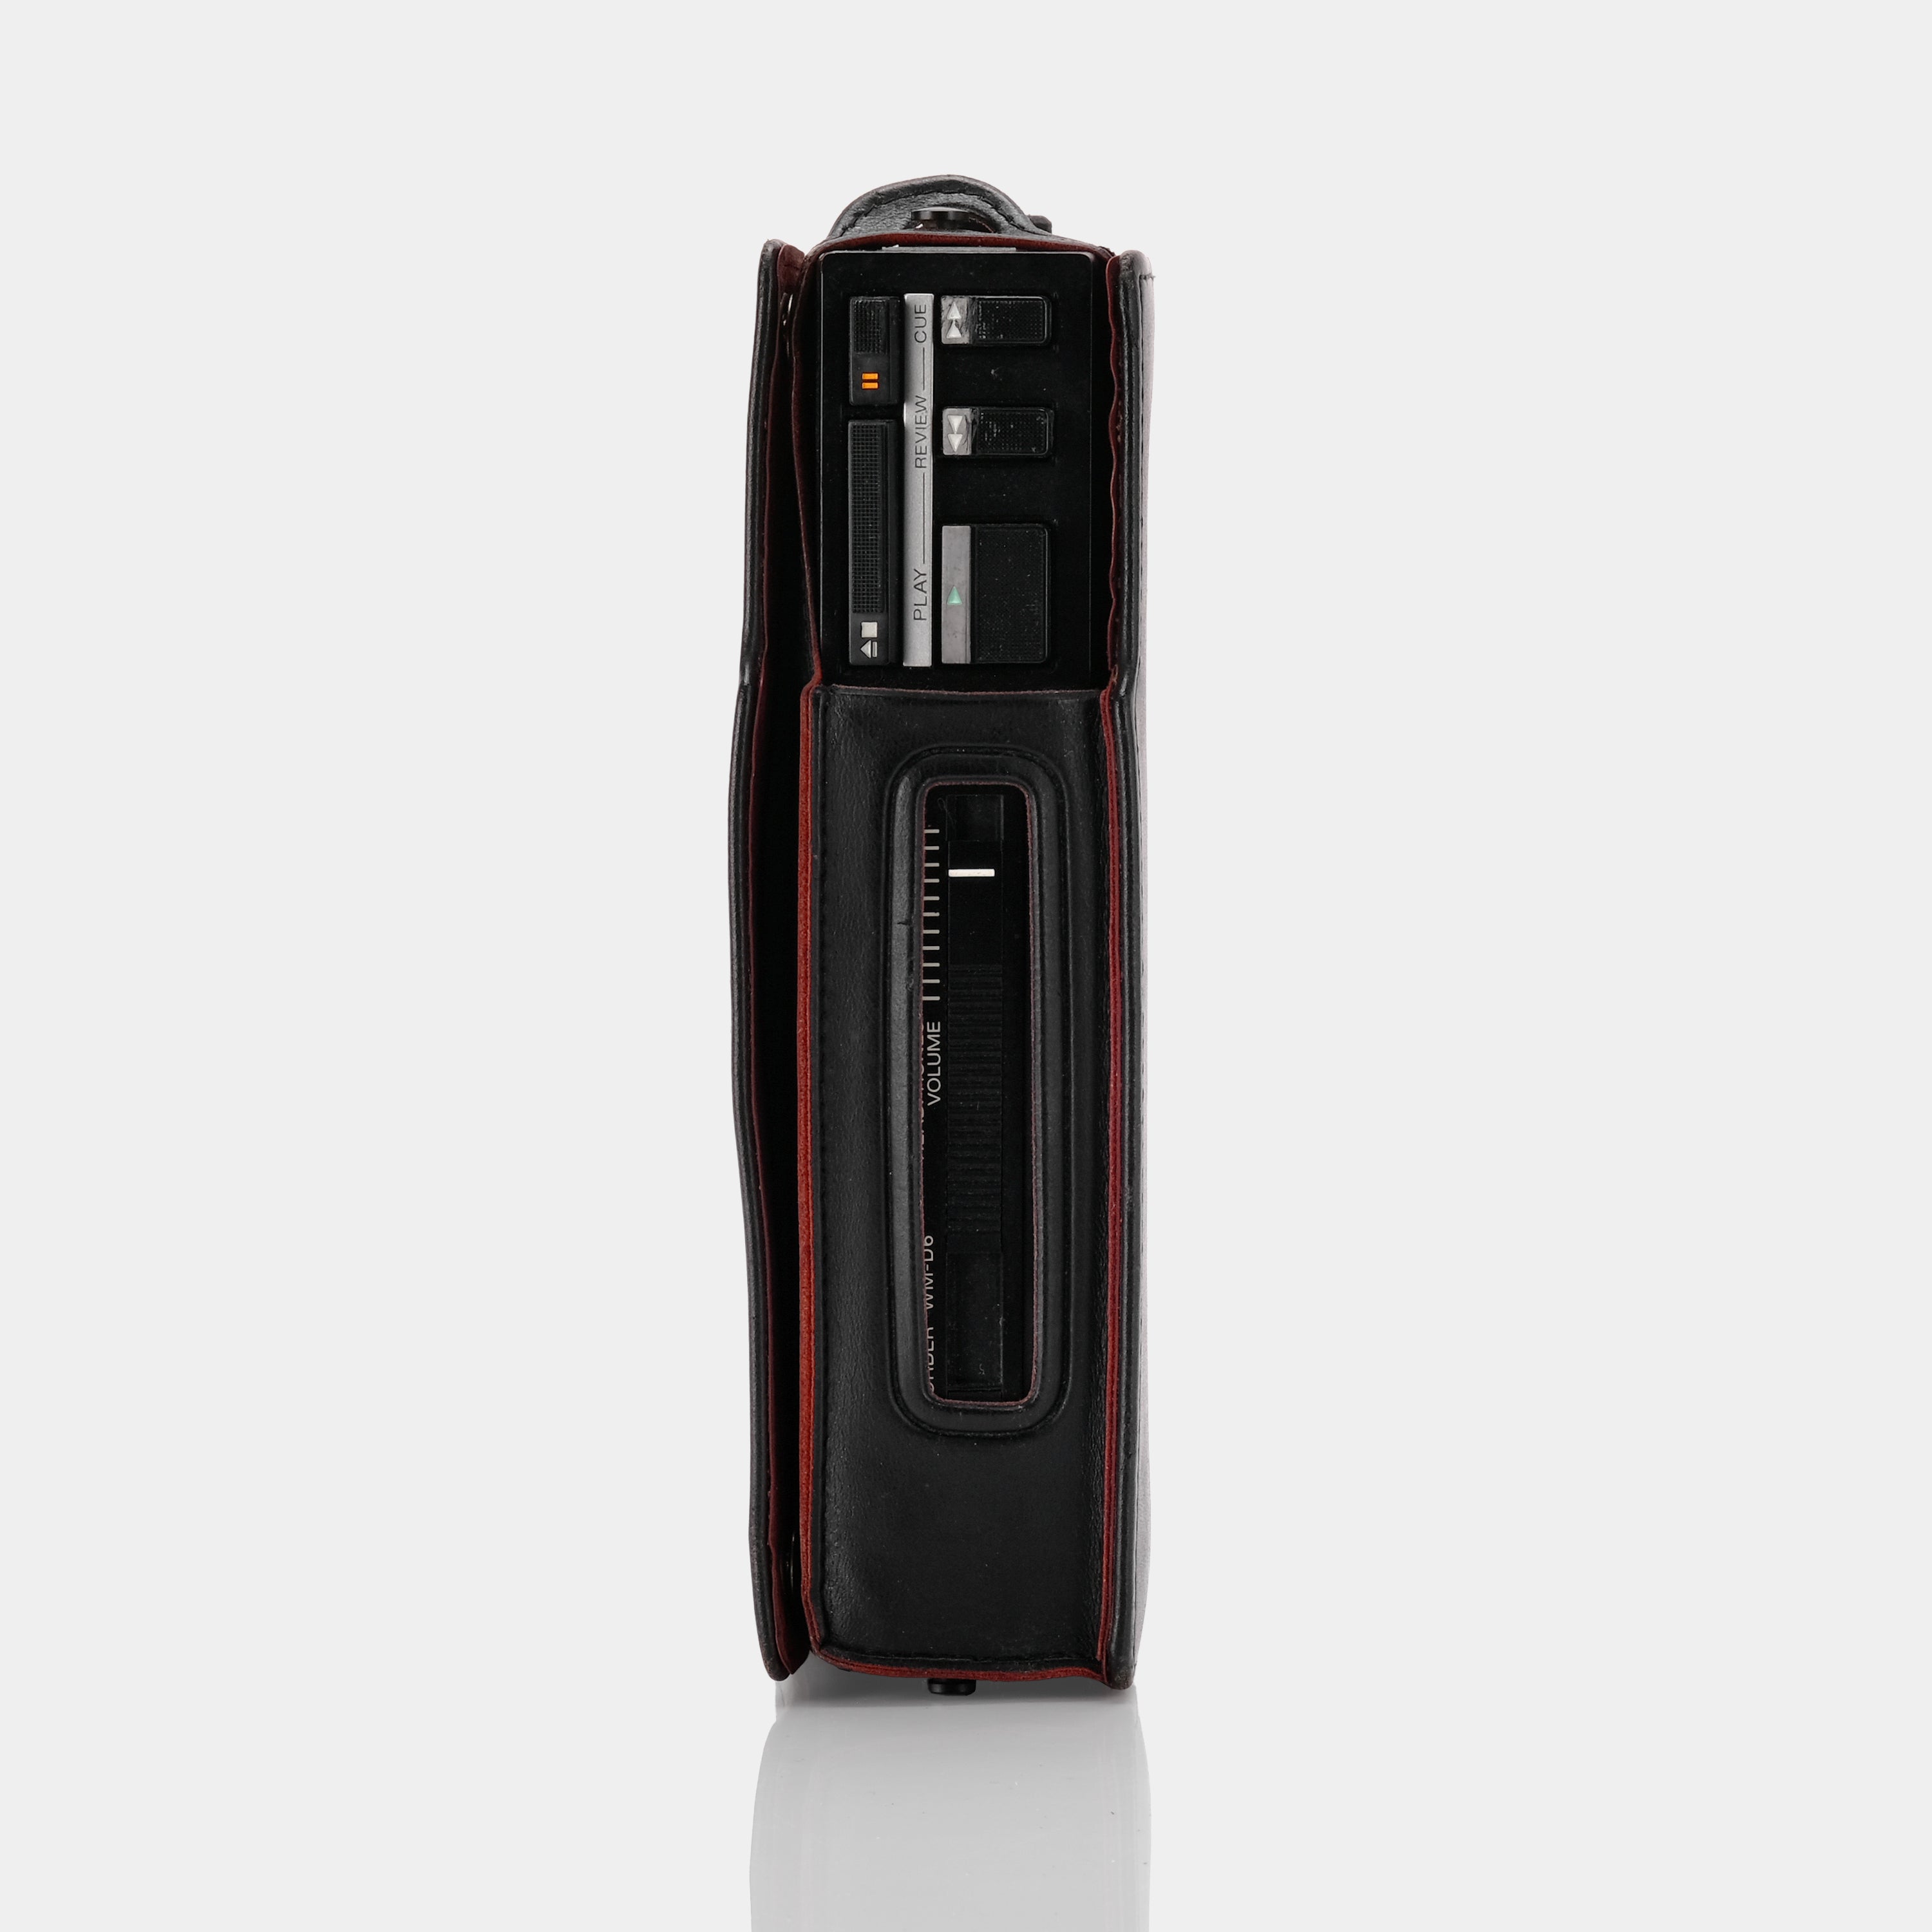 Sony Walkman Professional WM-D6 Black Leather Case